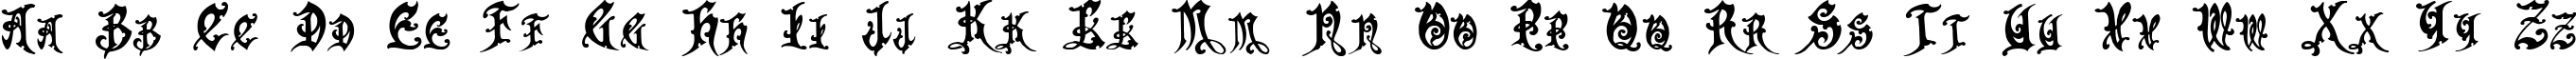 Пример написания английского алфавита шрифтом FrightWrite1 Medium